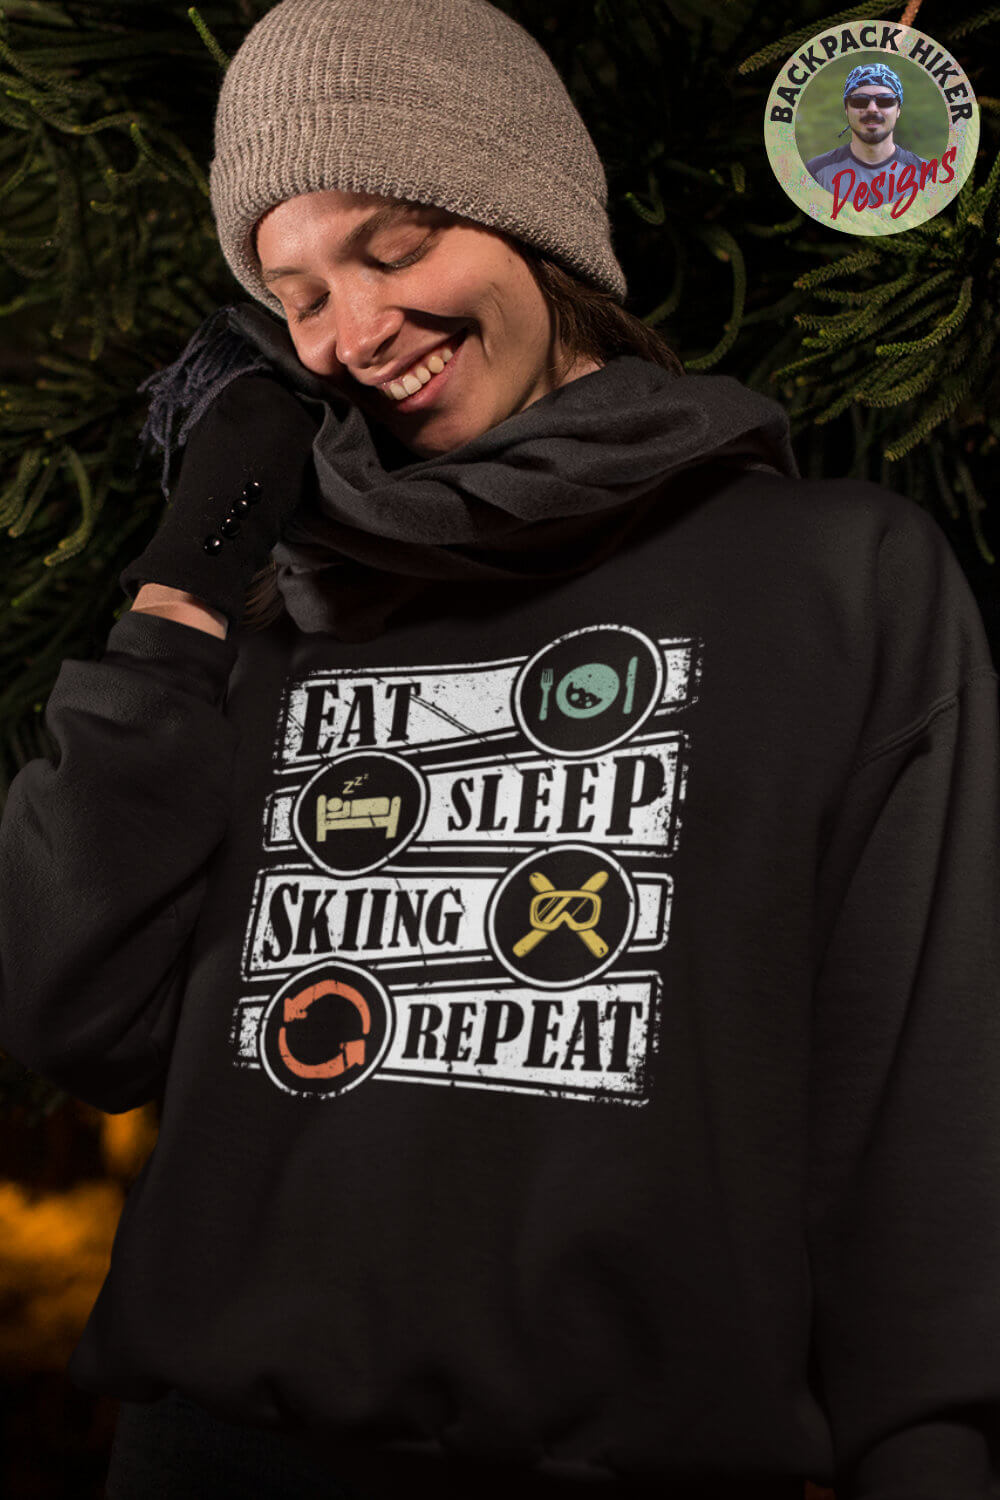 Eat sleep skiing repeat